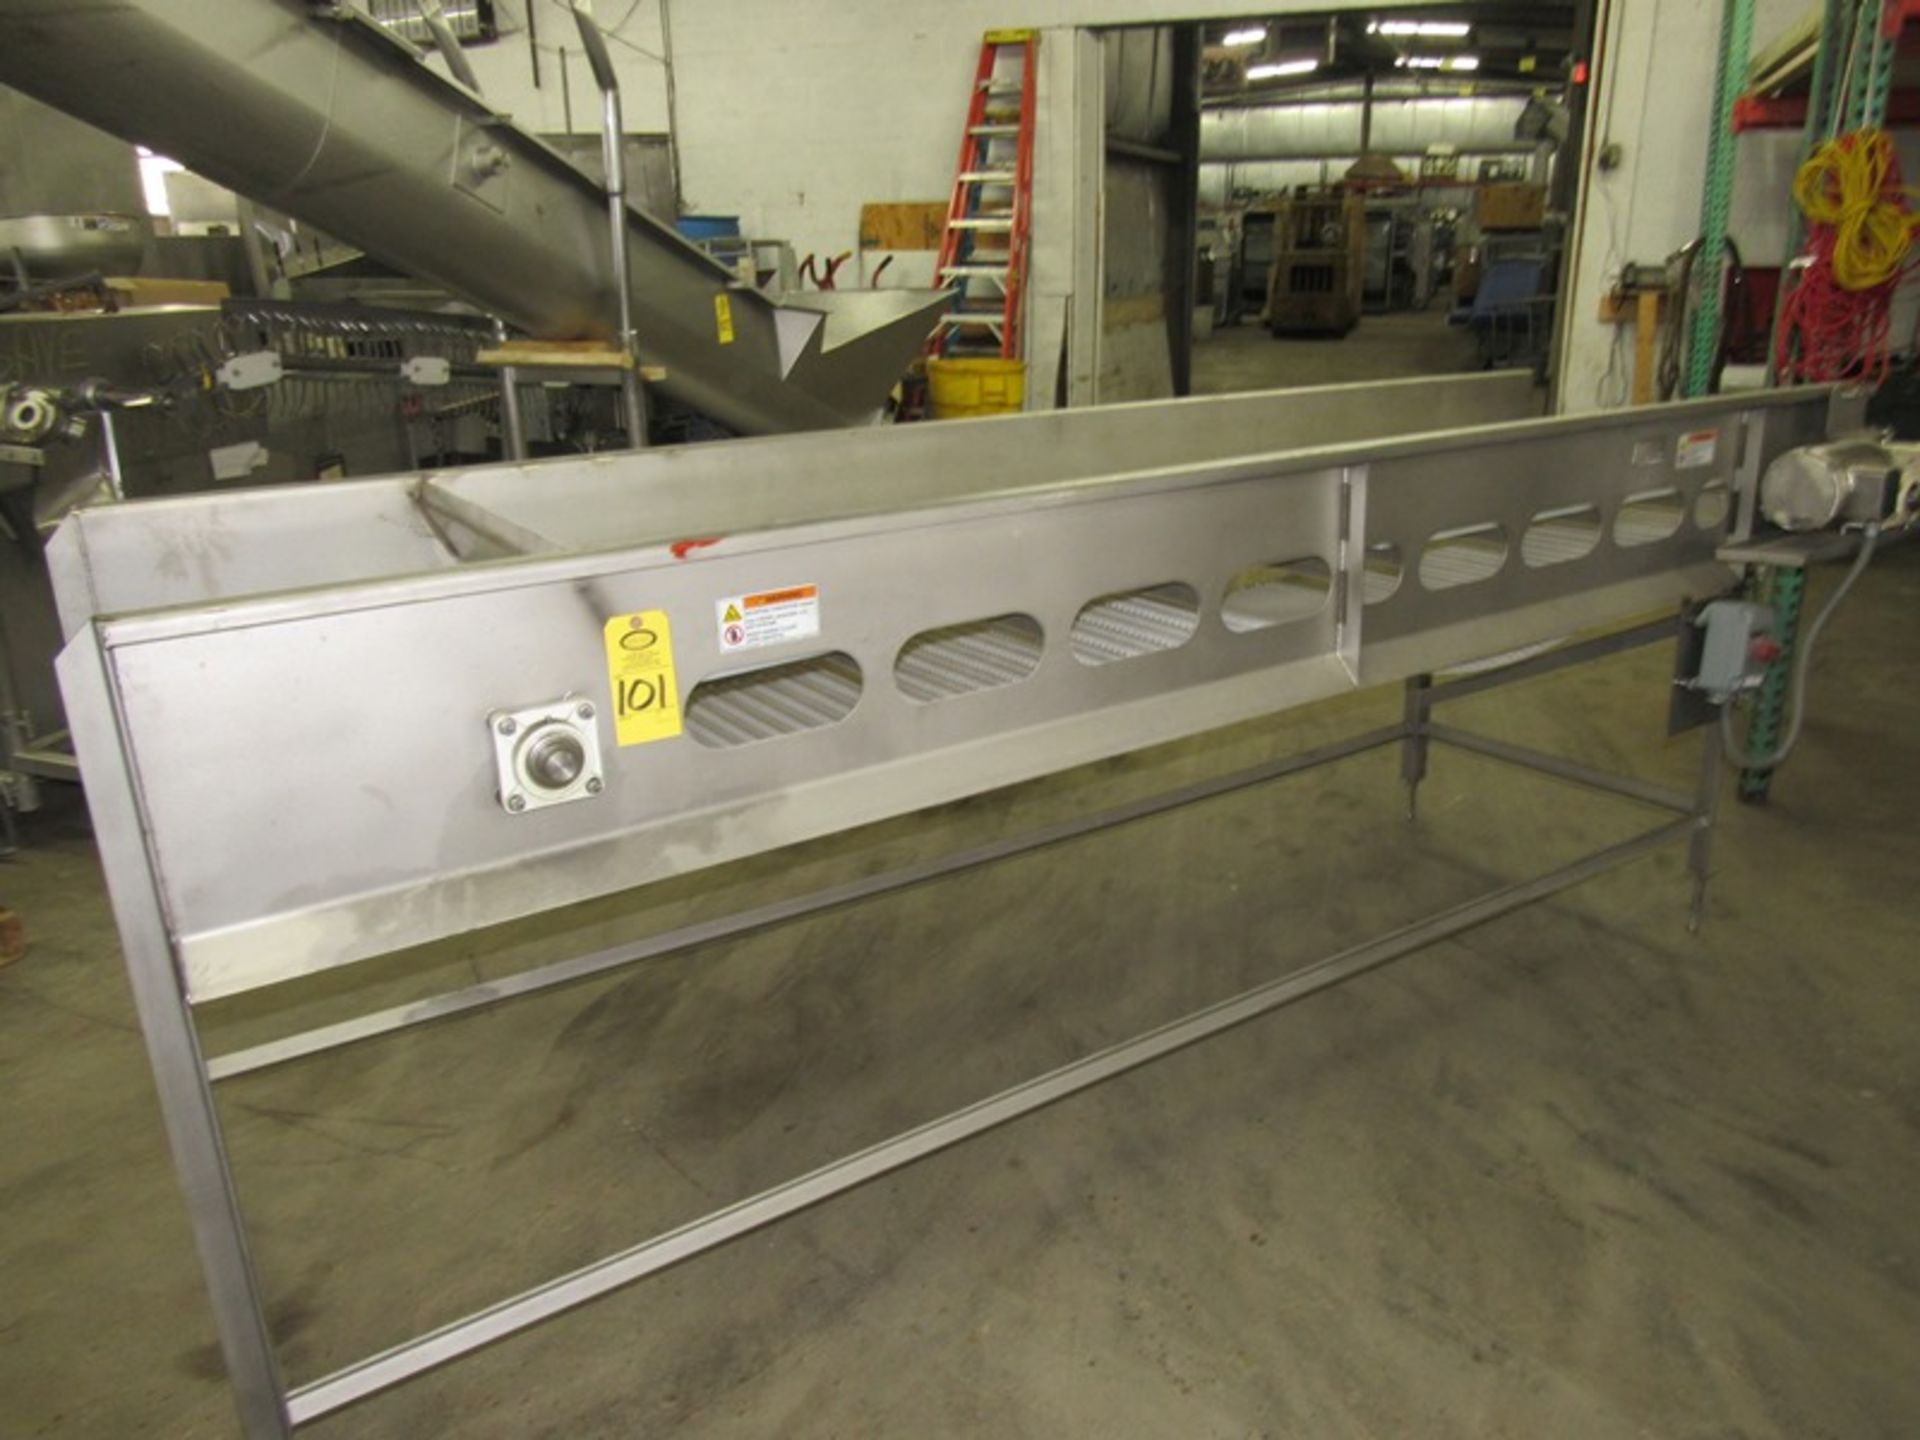 RMF Mdl. TTC Stainless Steel Conveyor, 30" W X 10' L plastic belt, 1/2 h.p., 208-230/460 volt